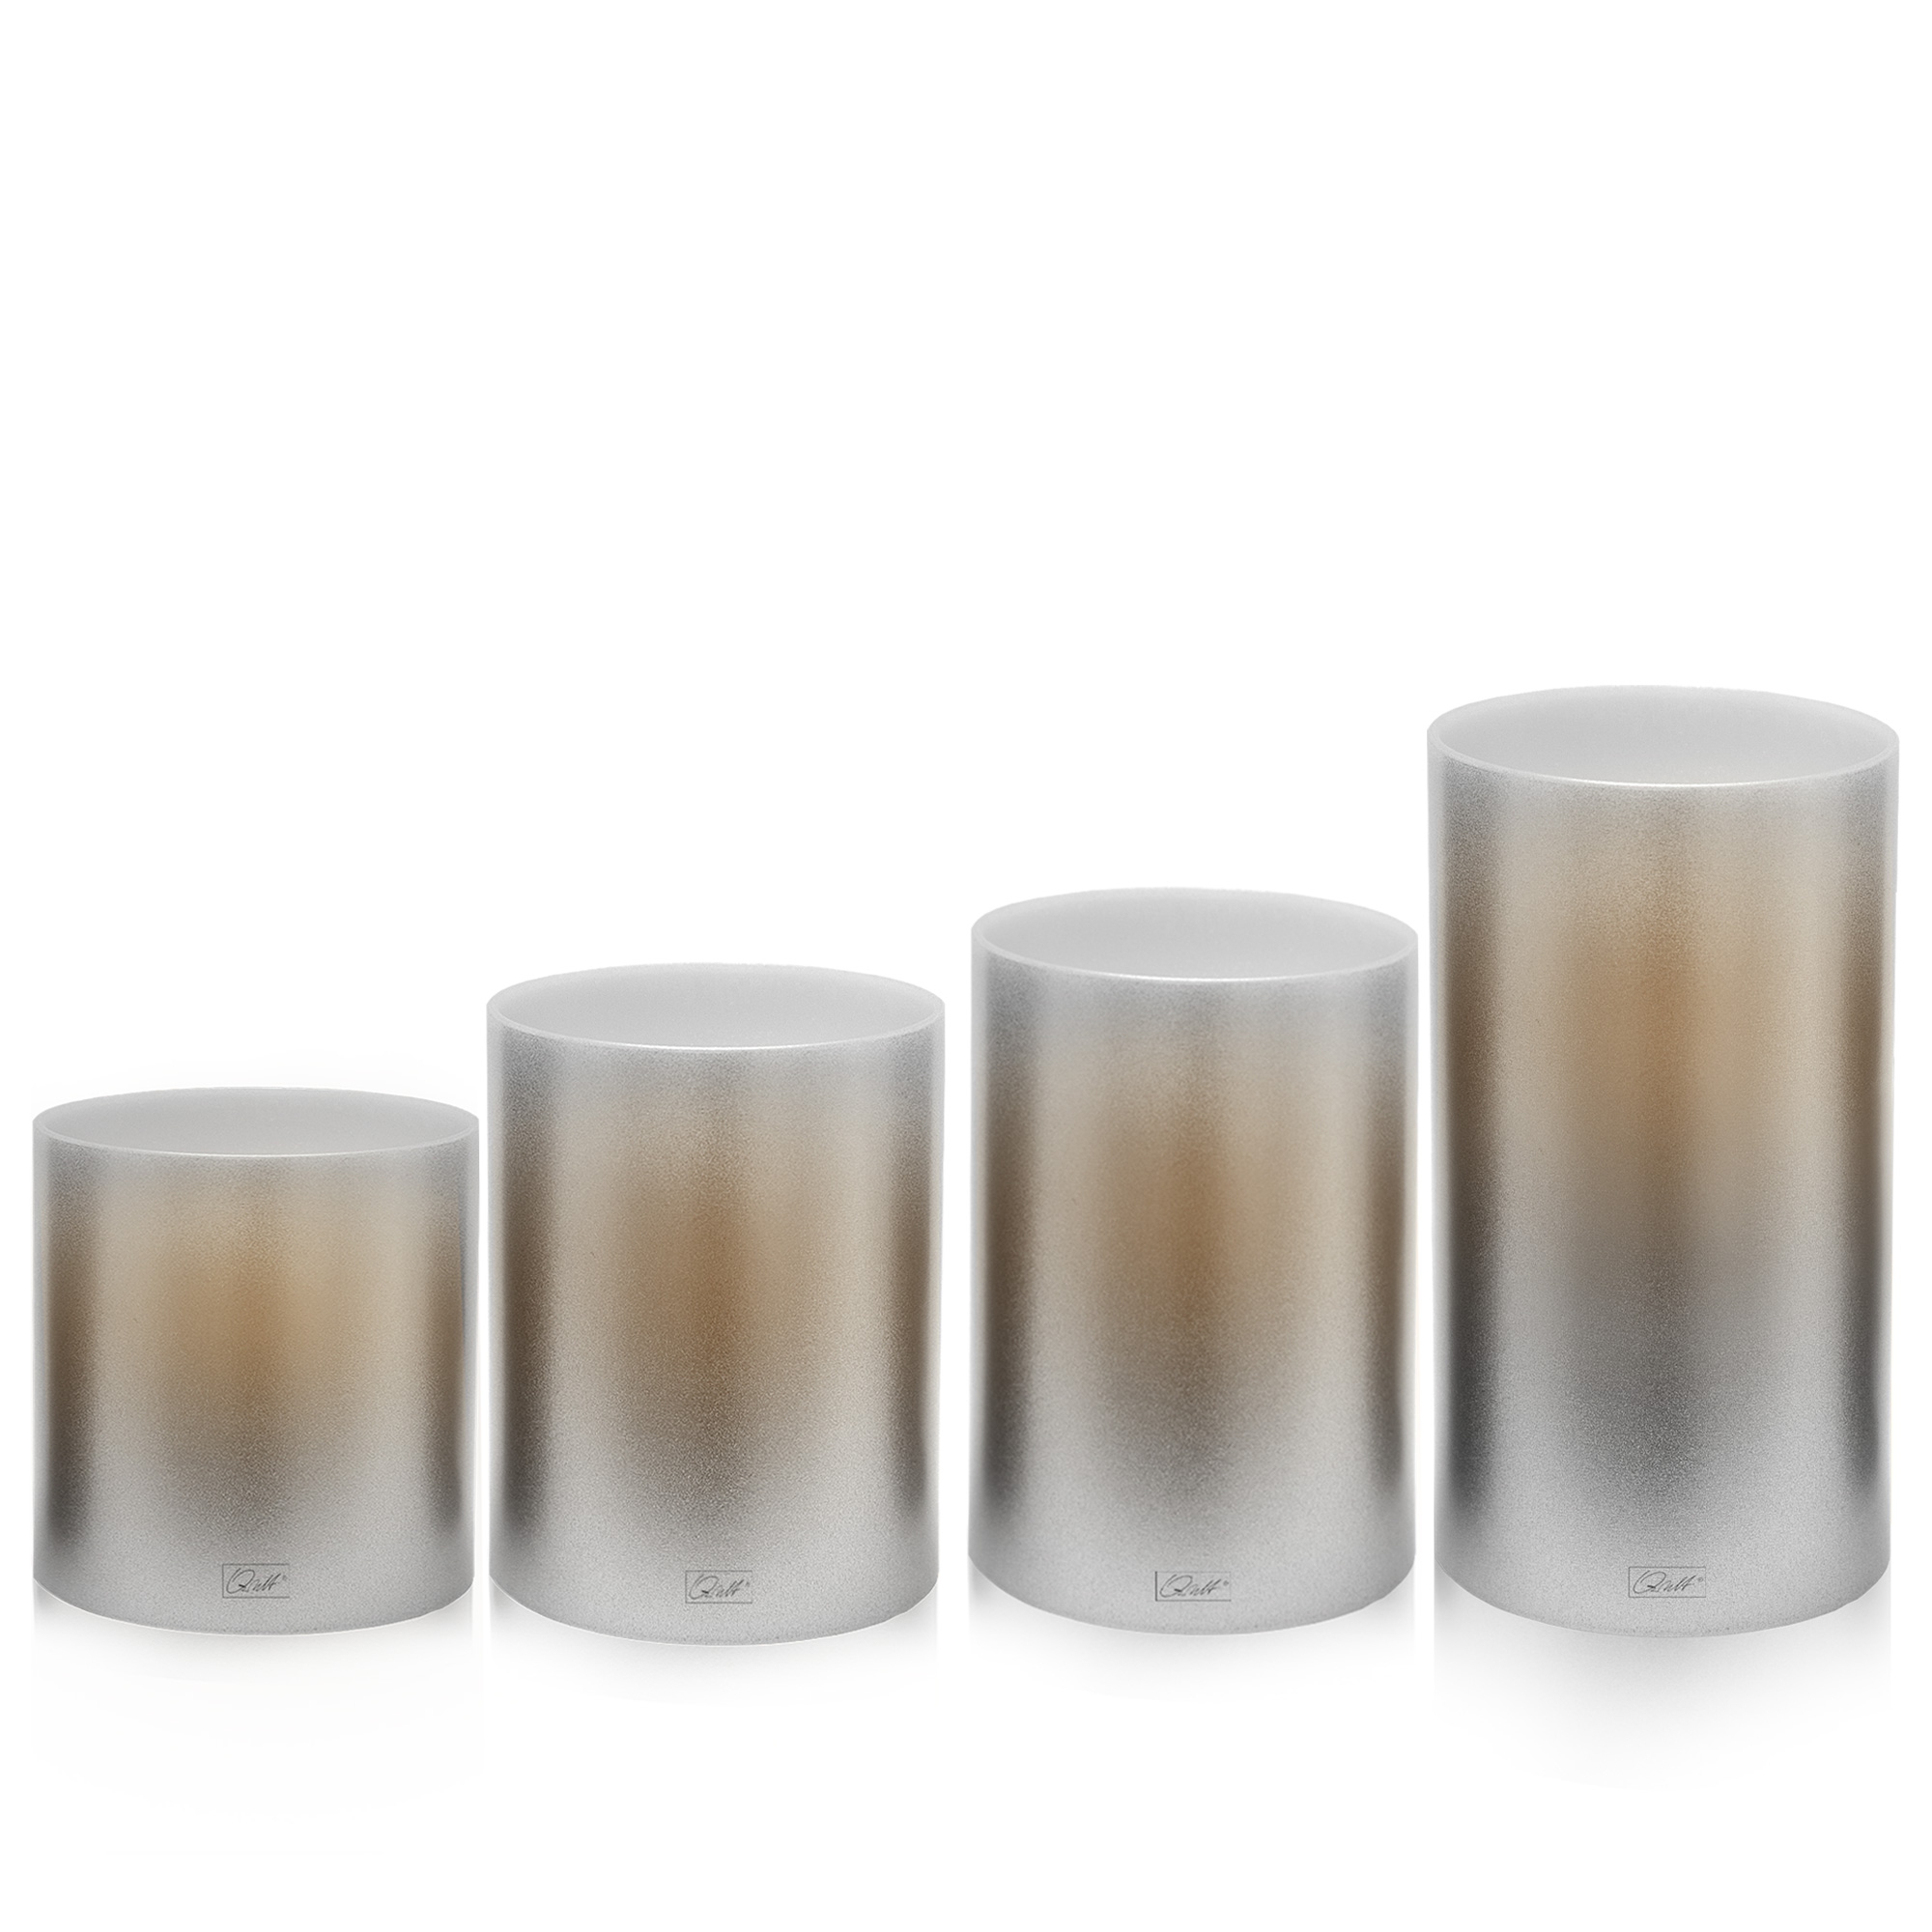 Qult Farluce Inside - Teelichthalter in Kerzenform Ø 8 cm - Silver